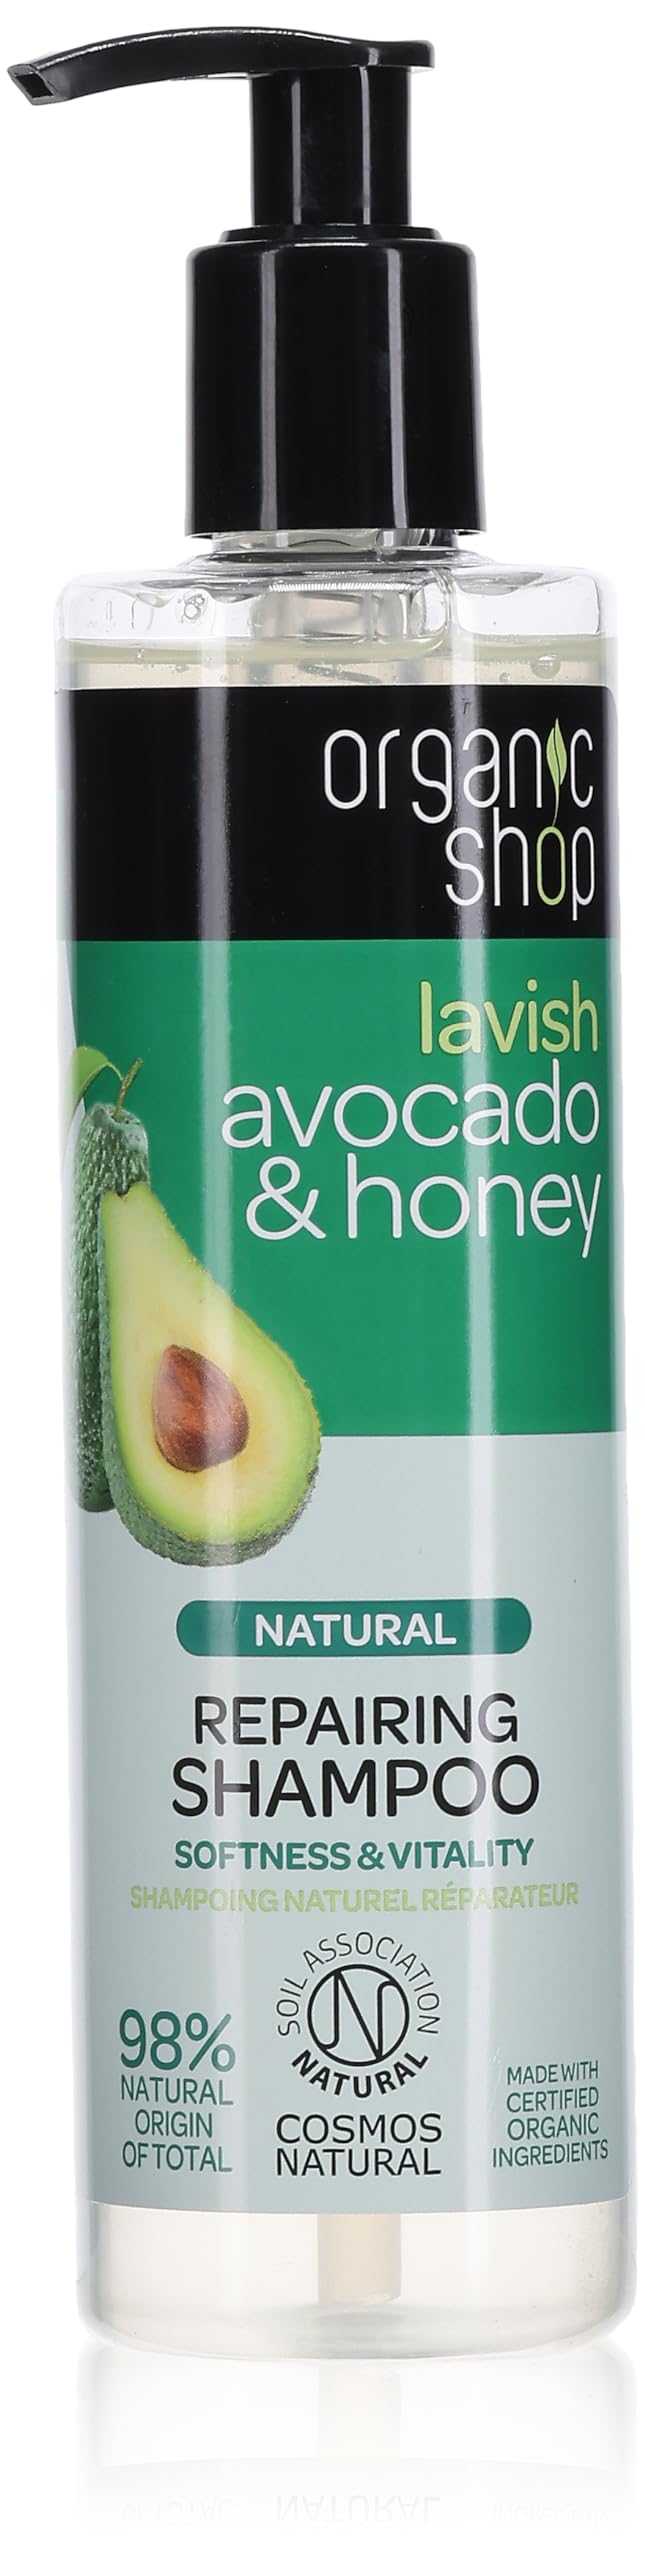 organic shop avocado & honey szampon opinie